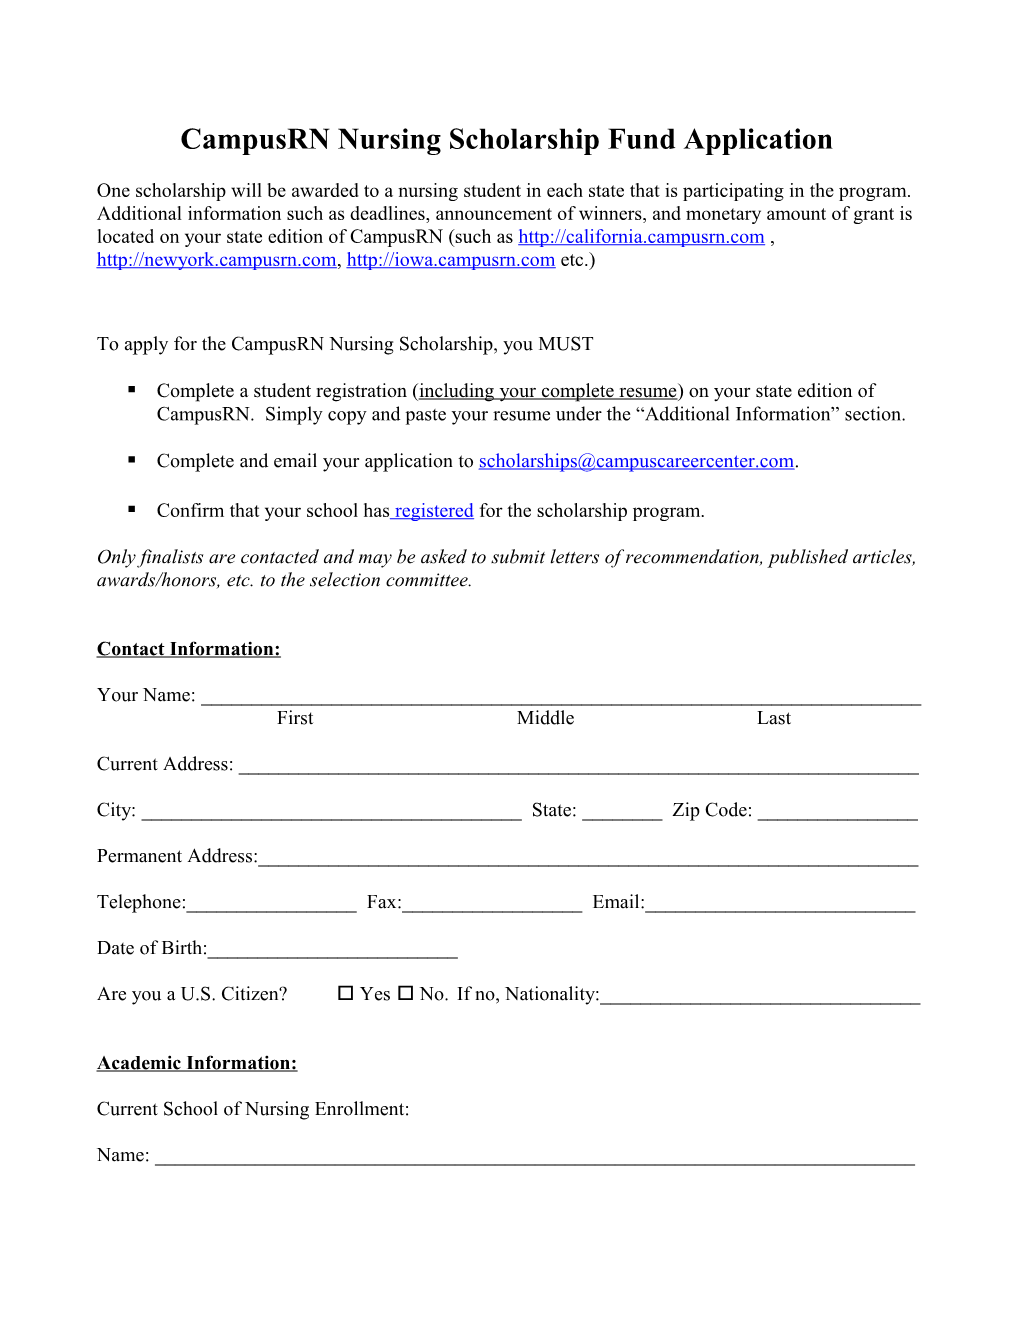 Campusrn Nursing Scholarship Fund Application for Students in California